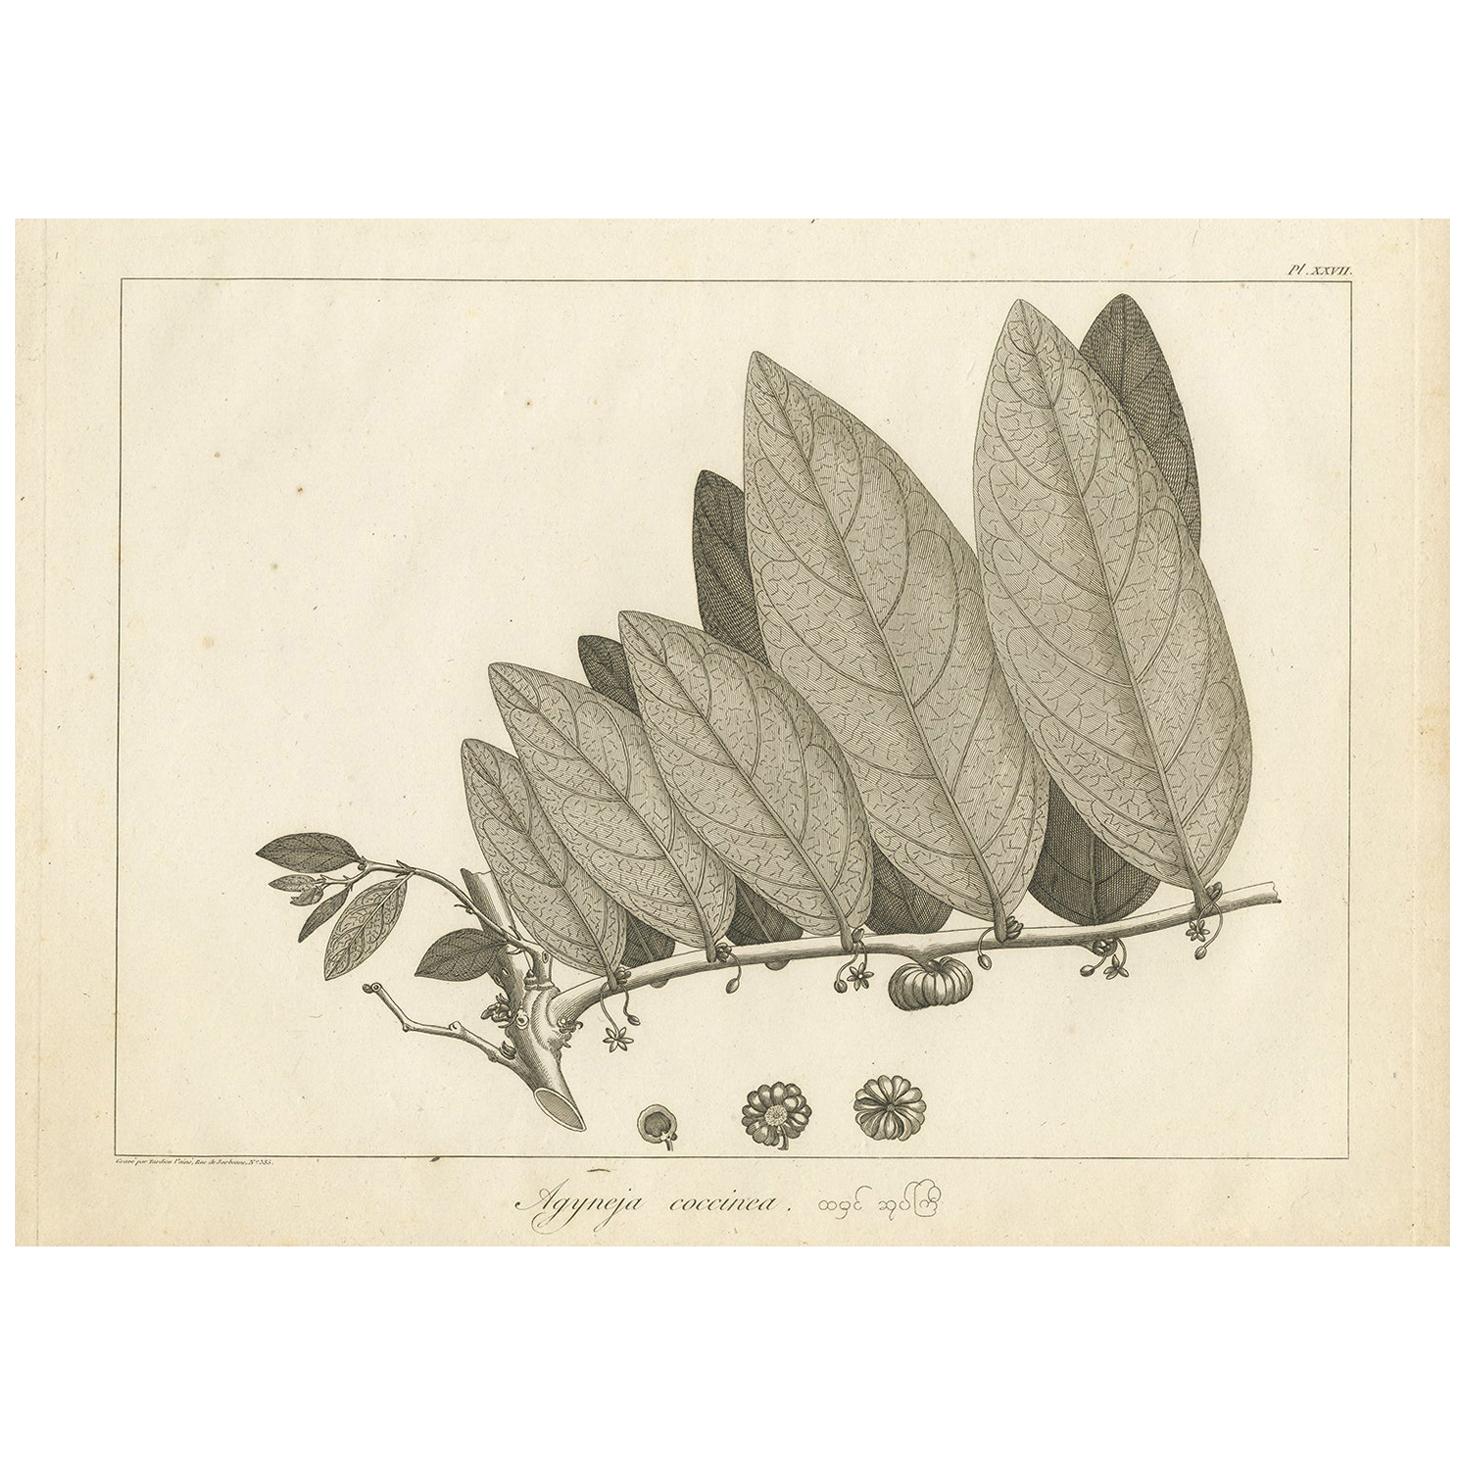 Antique Print of a Coccinea Plant Species by Symes '1800'